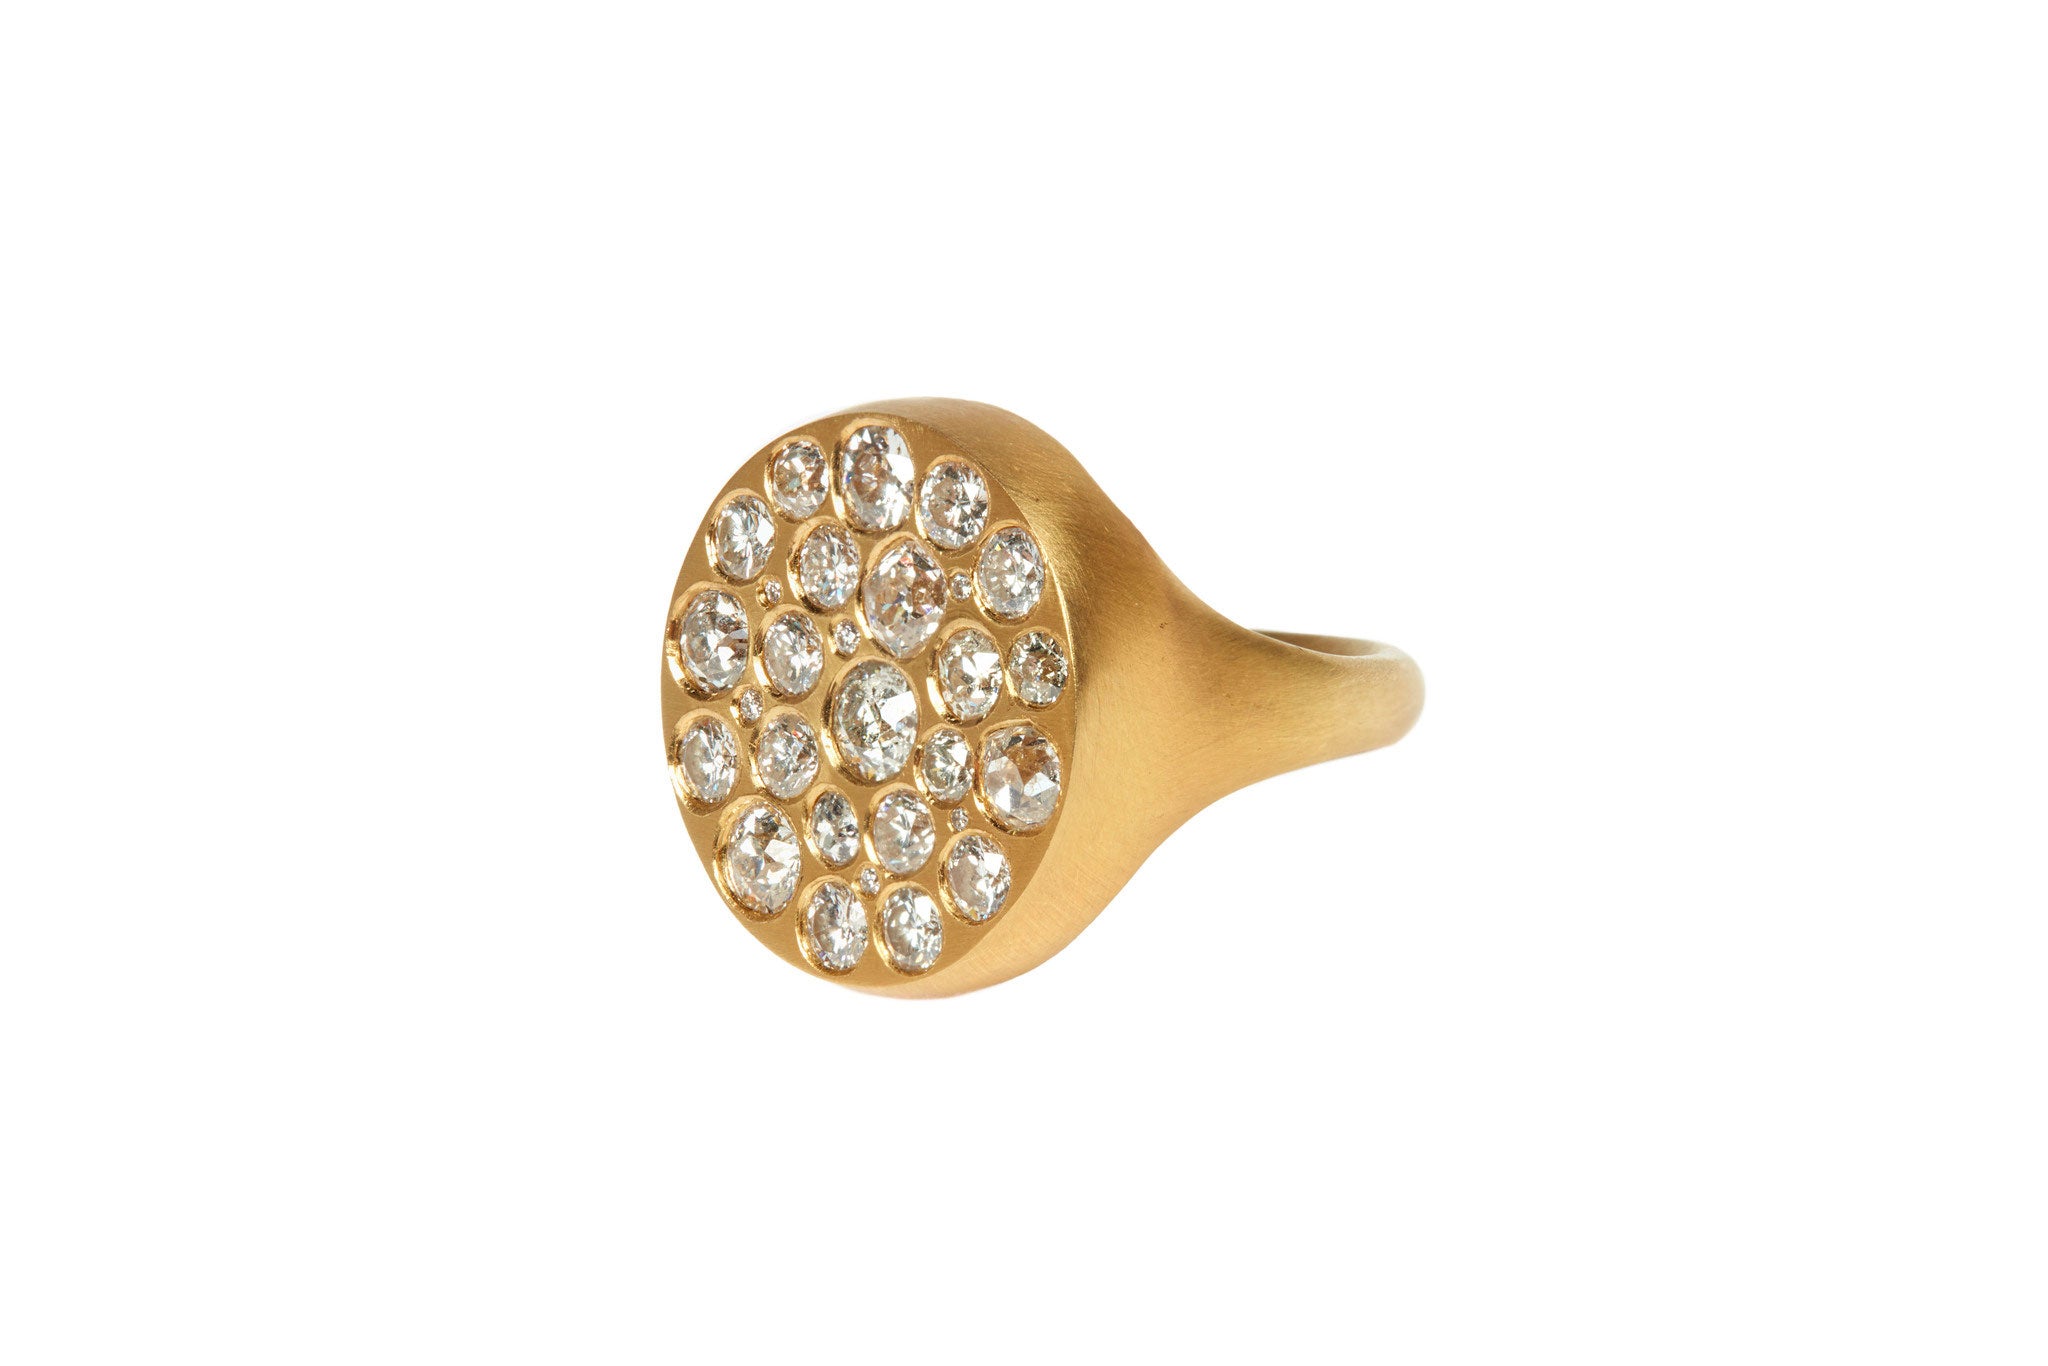 darius jewels hand made fine jewelry 18k yellow gold oversized diamond signet ring antique old mine cut diamonds darius khonsary